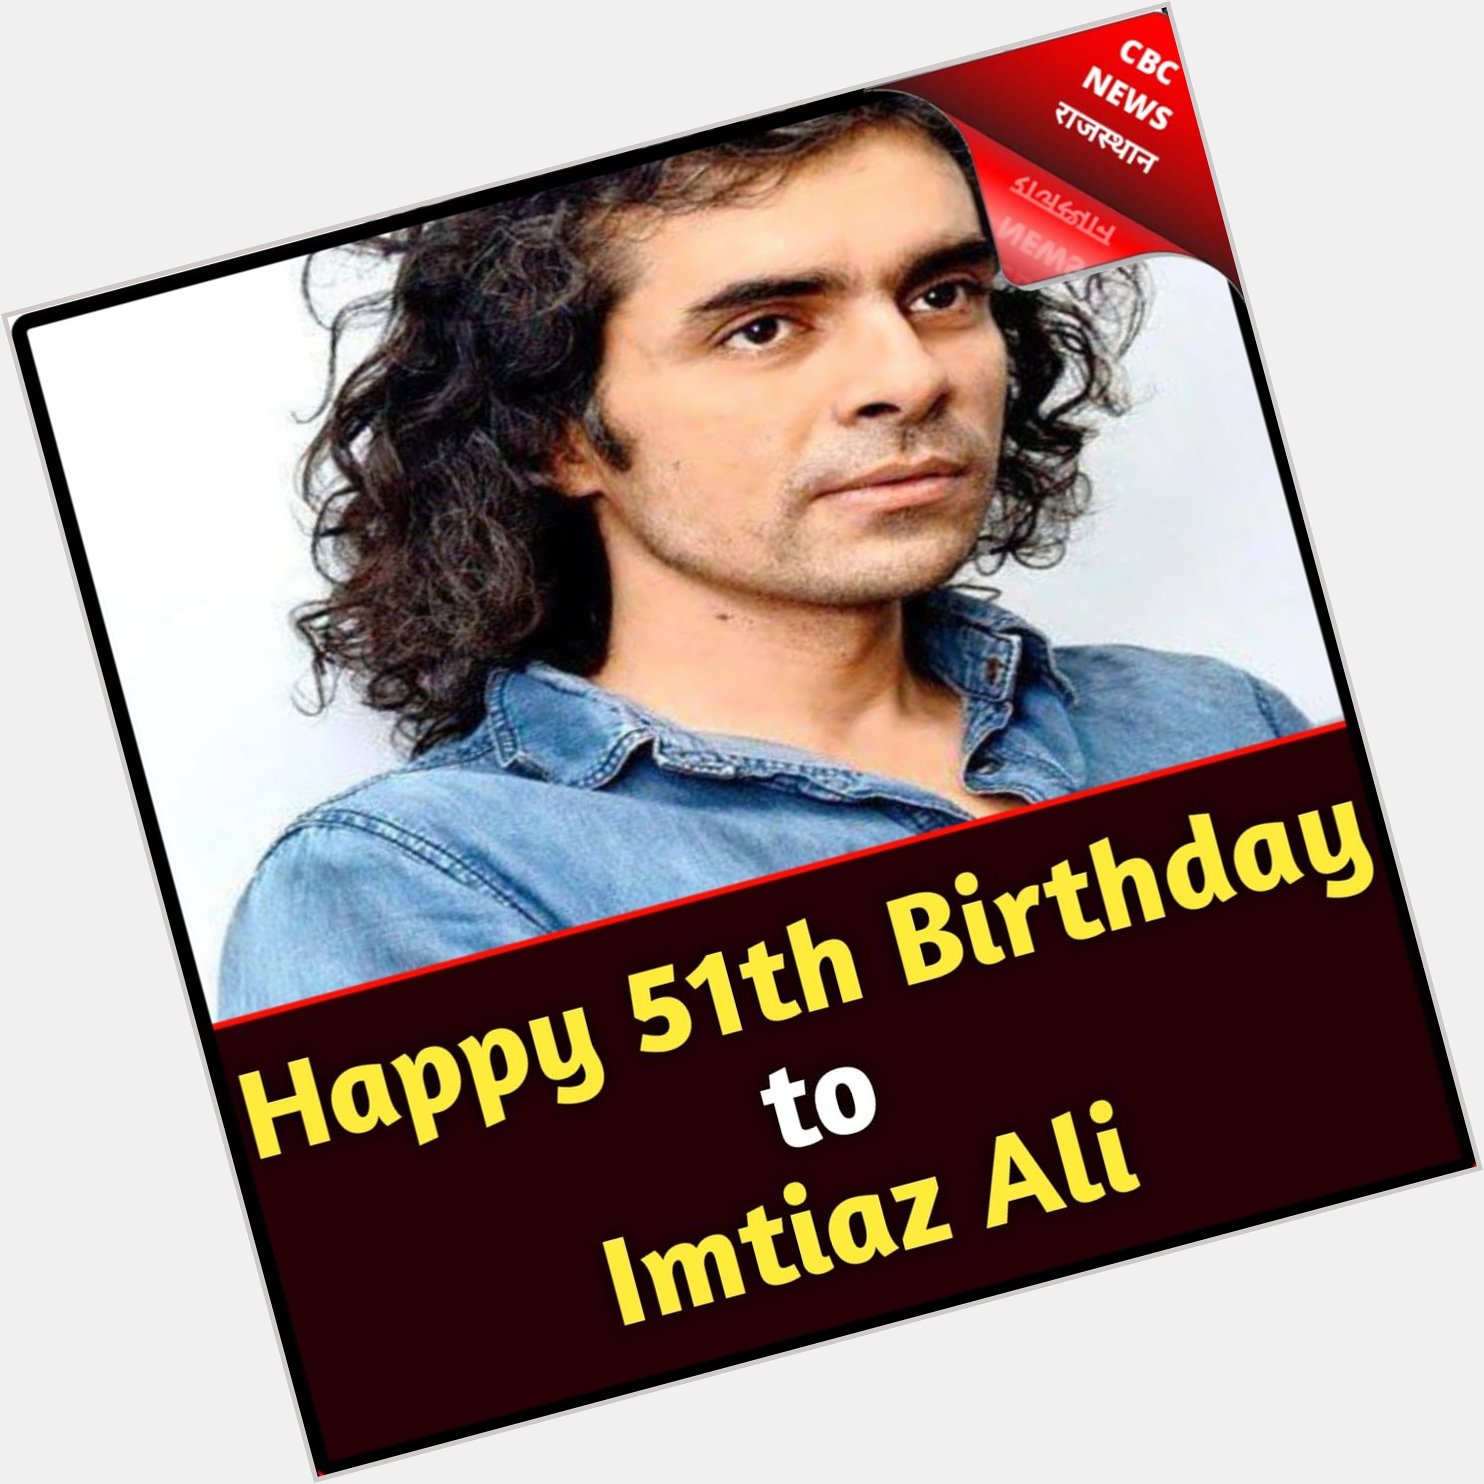 Happy 51th Birthday to 
Imtiaz Ali   